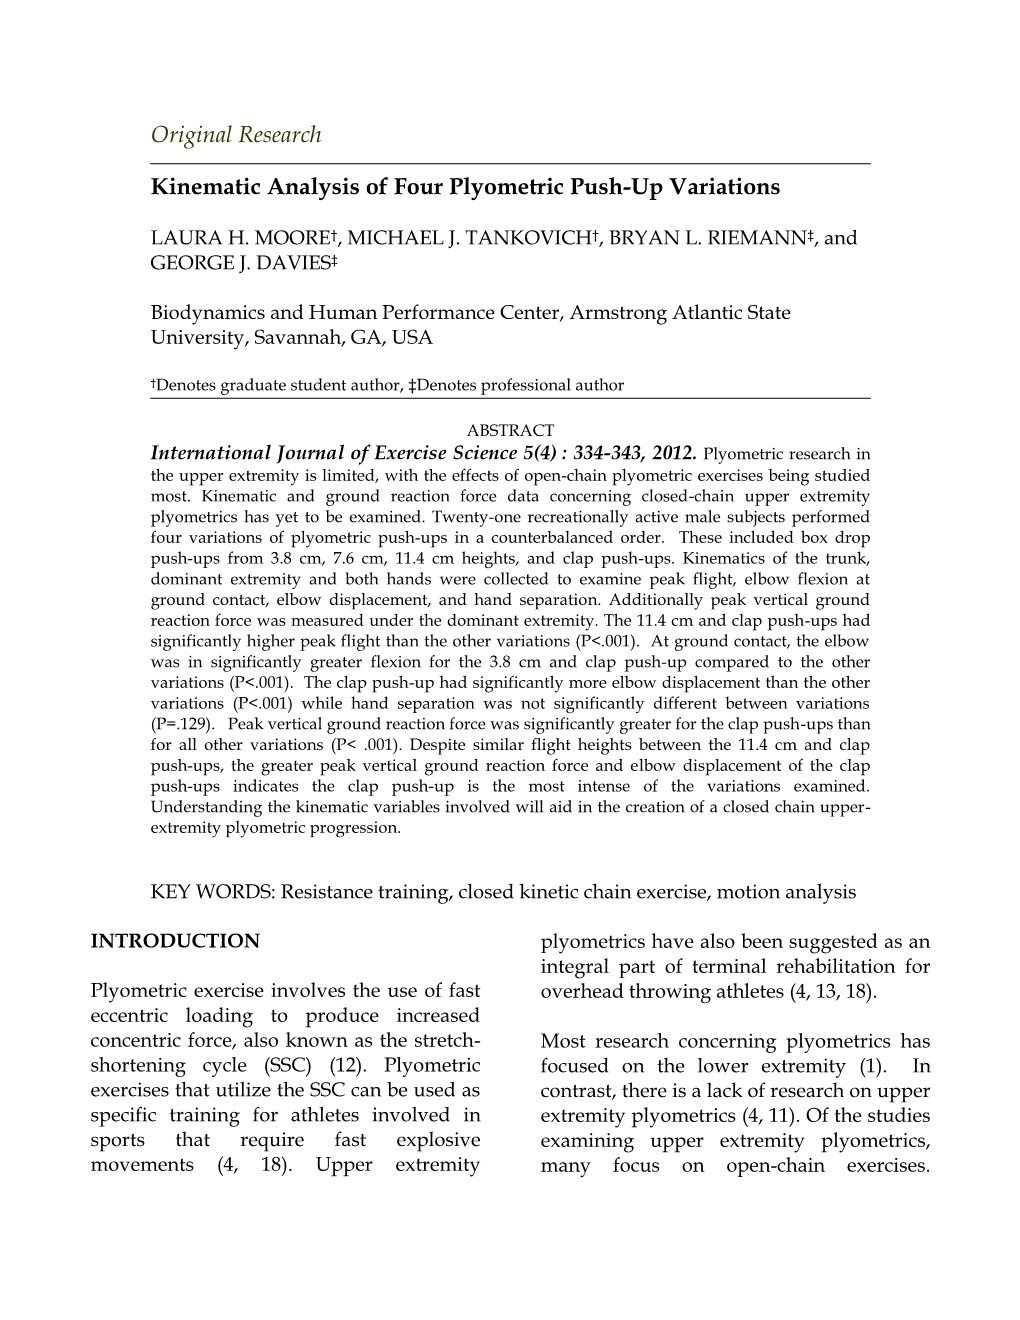 Kinematic Analysis of Four Plyometric Push-Up Variations